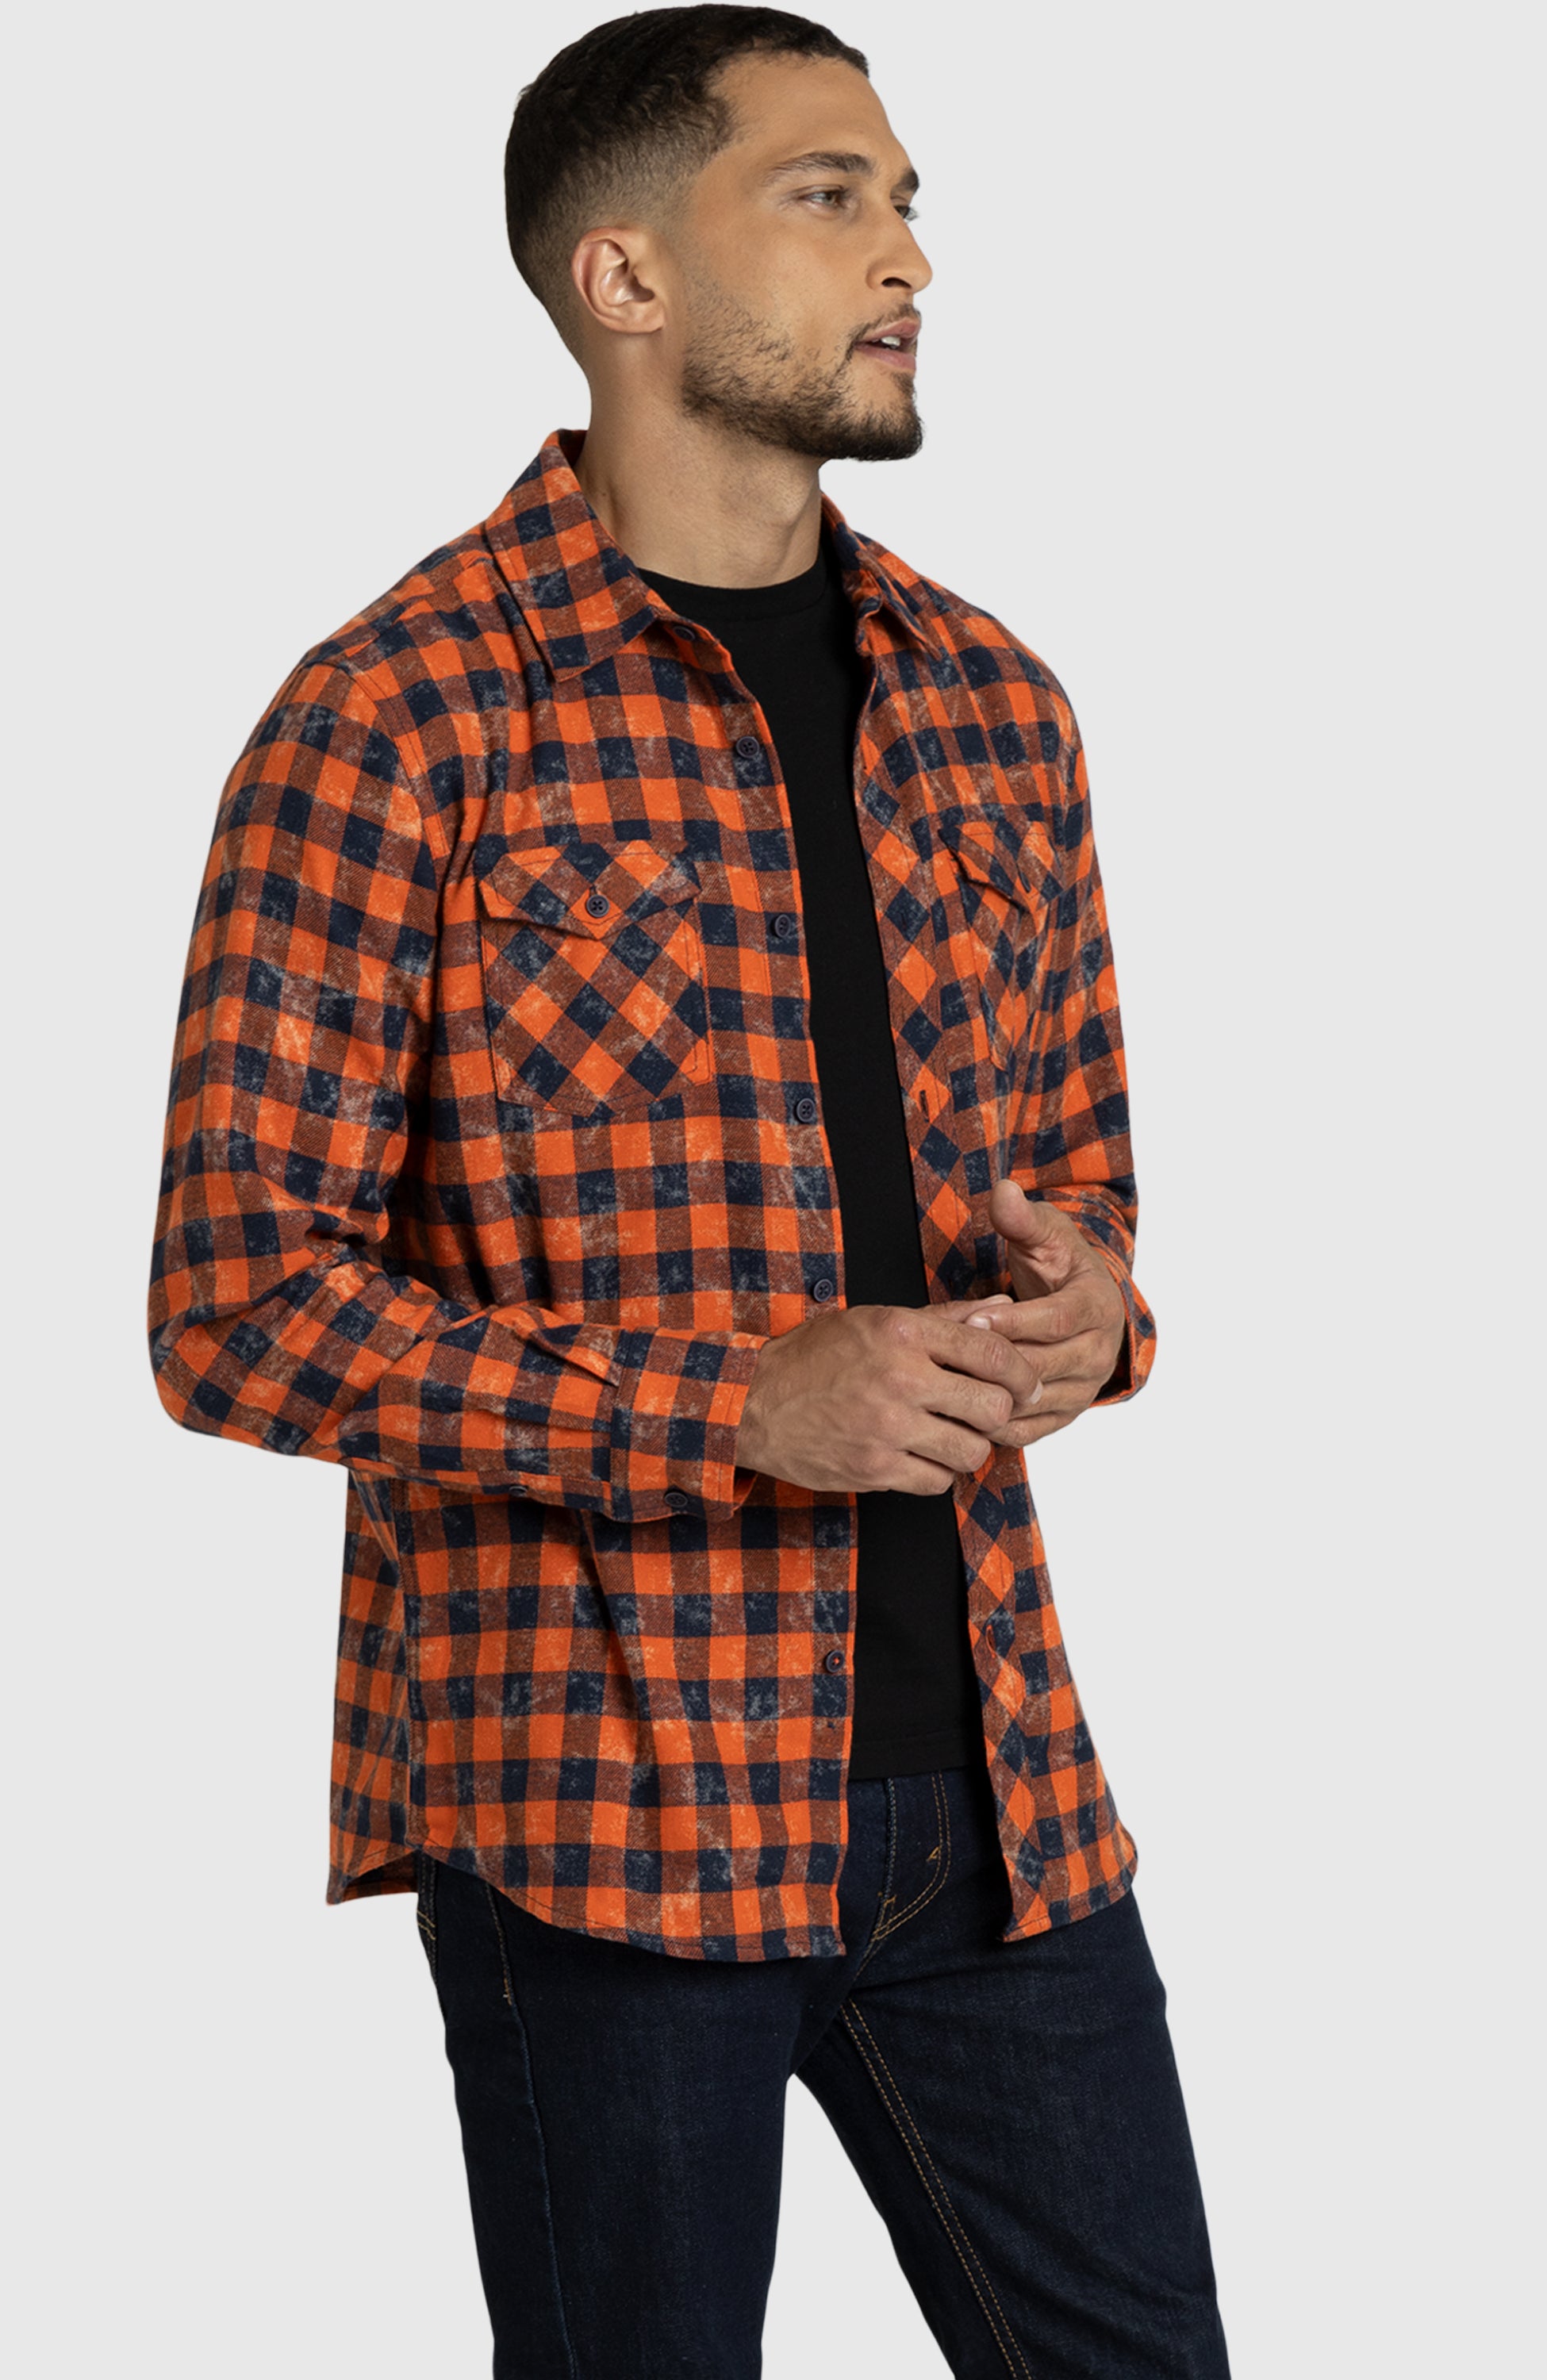 Spiced Orange Plaid Shirt for Men | Boston Traders XXL / Spiced Orange